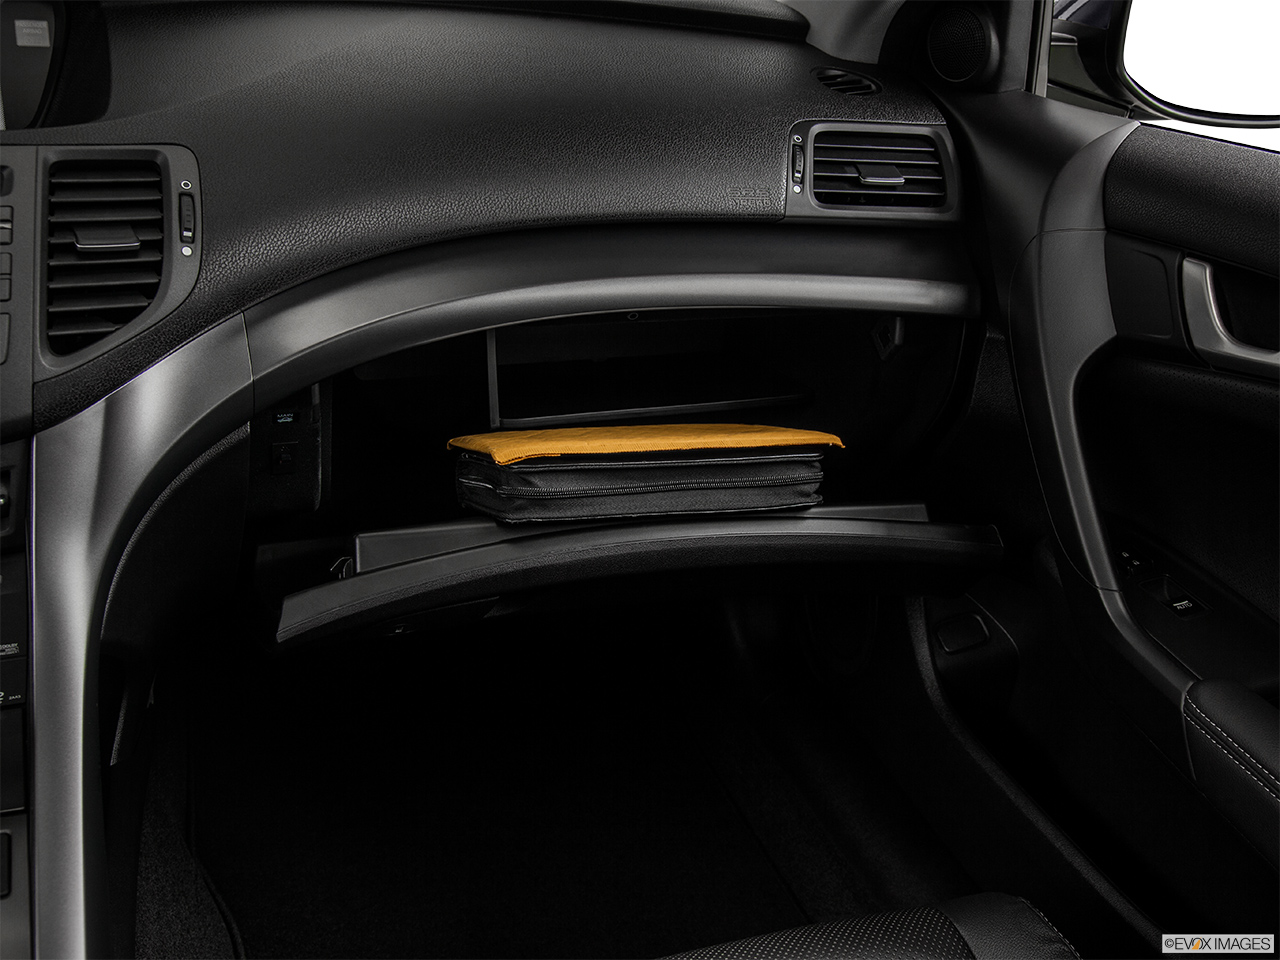 2014 Acura TSX 5-Speed Automatic Glove box open. 